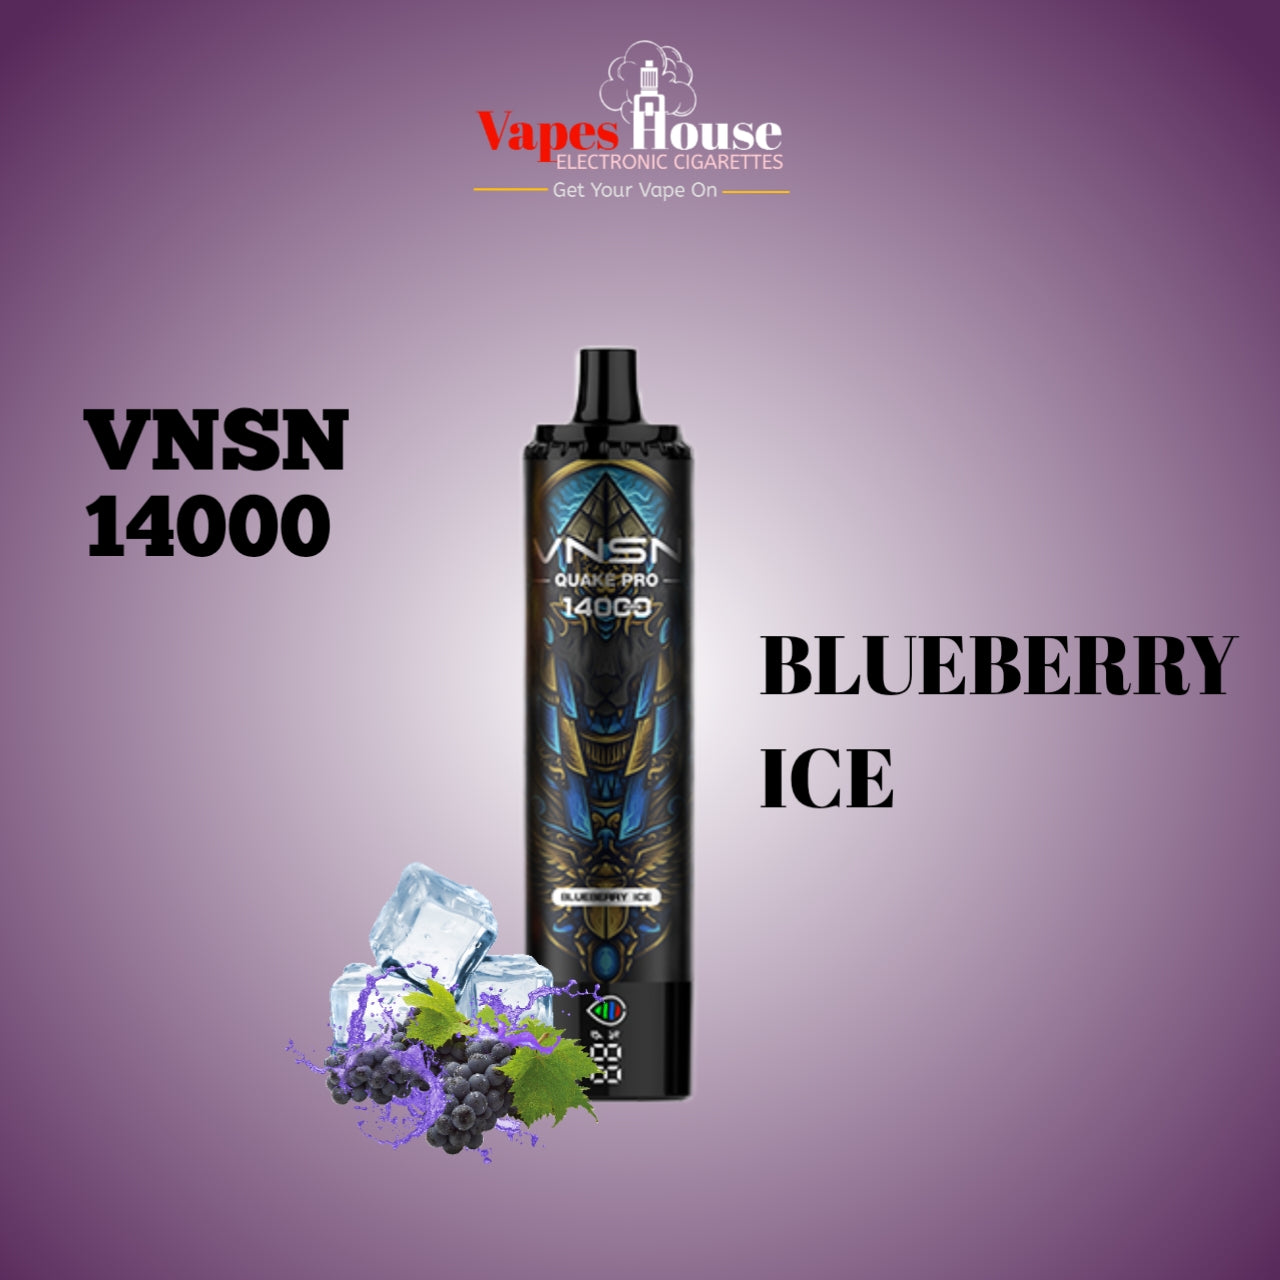 VNSN QUAKE PRO 14000 BLUEBERRY ICE